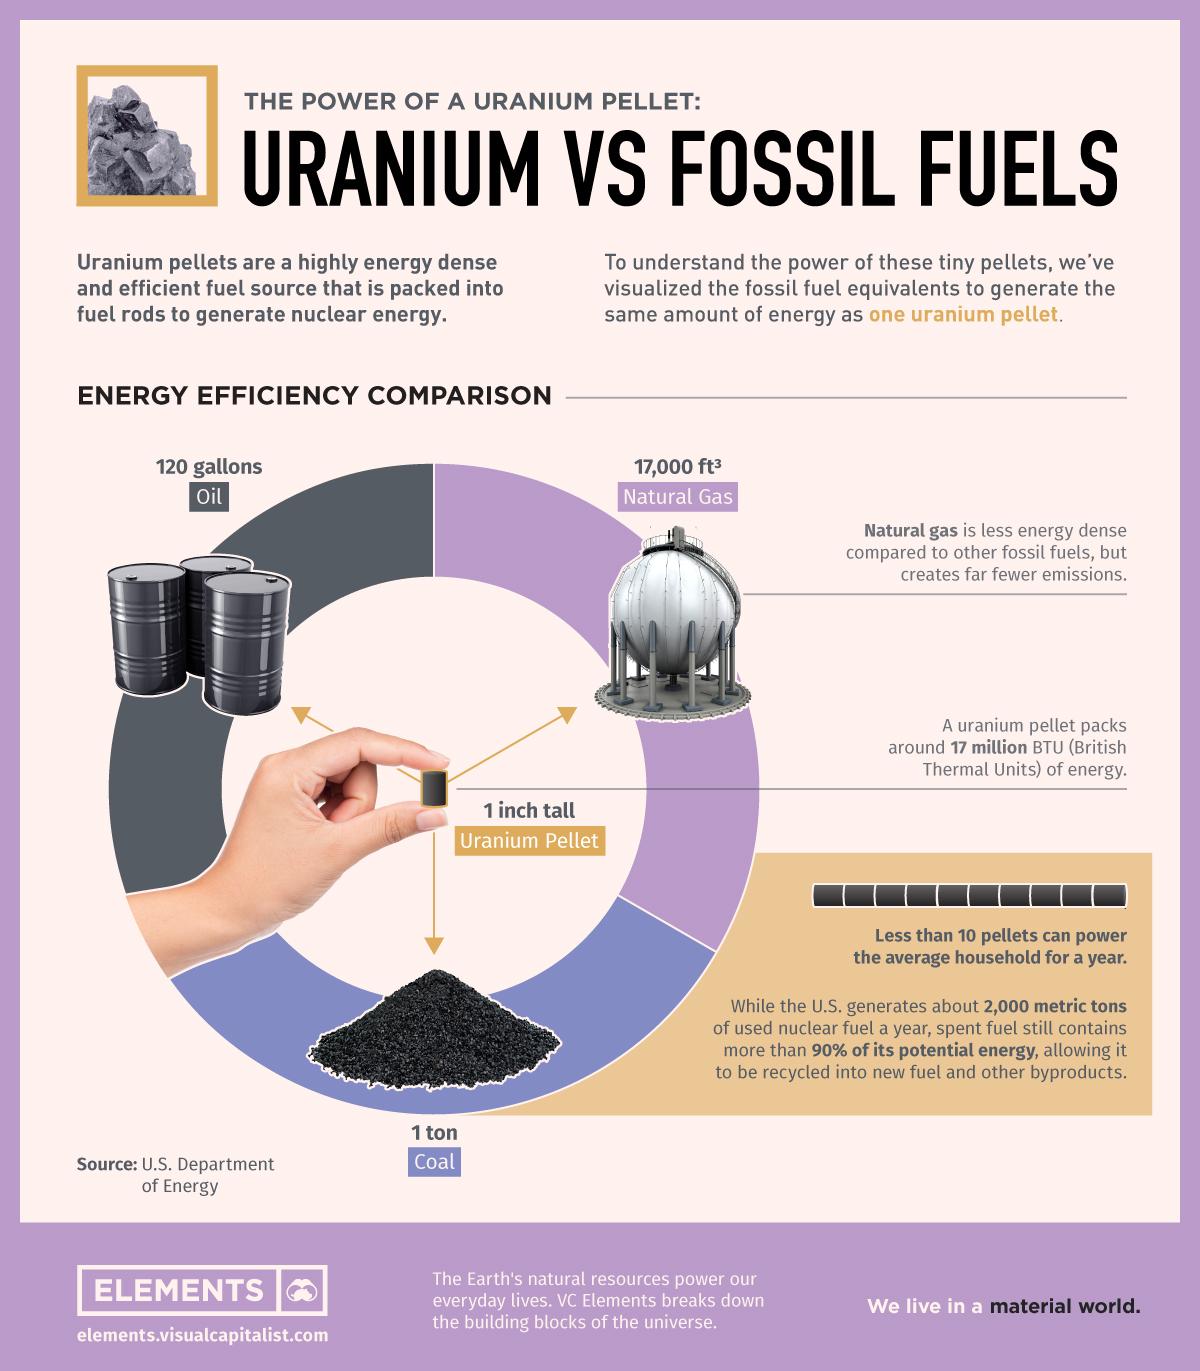 Uranium pellet energy compared to fossil fuels